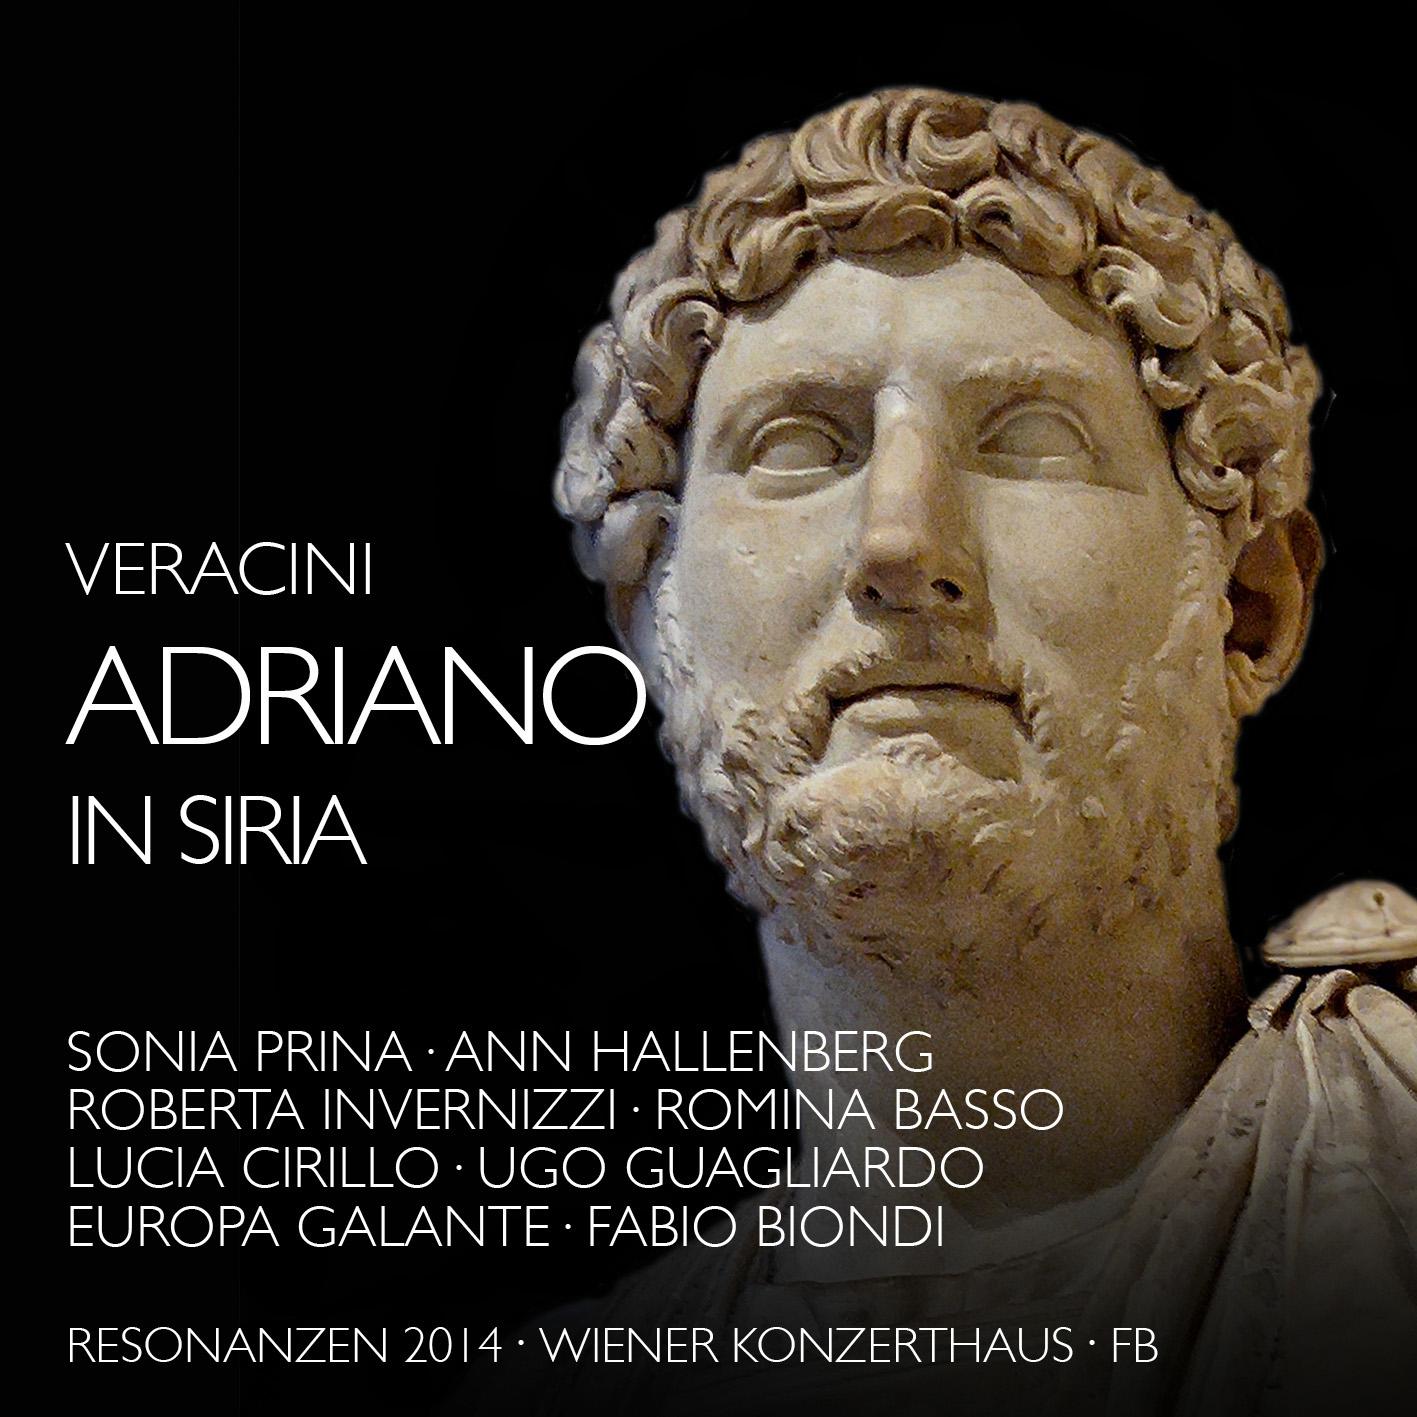 Adriano in Siria, Act III: Tenerezze